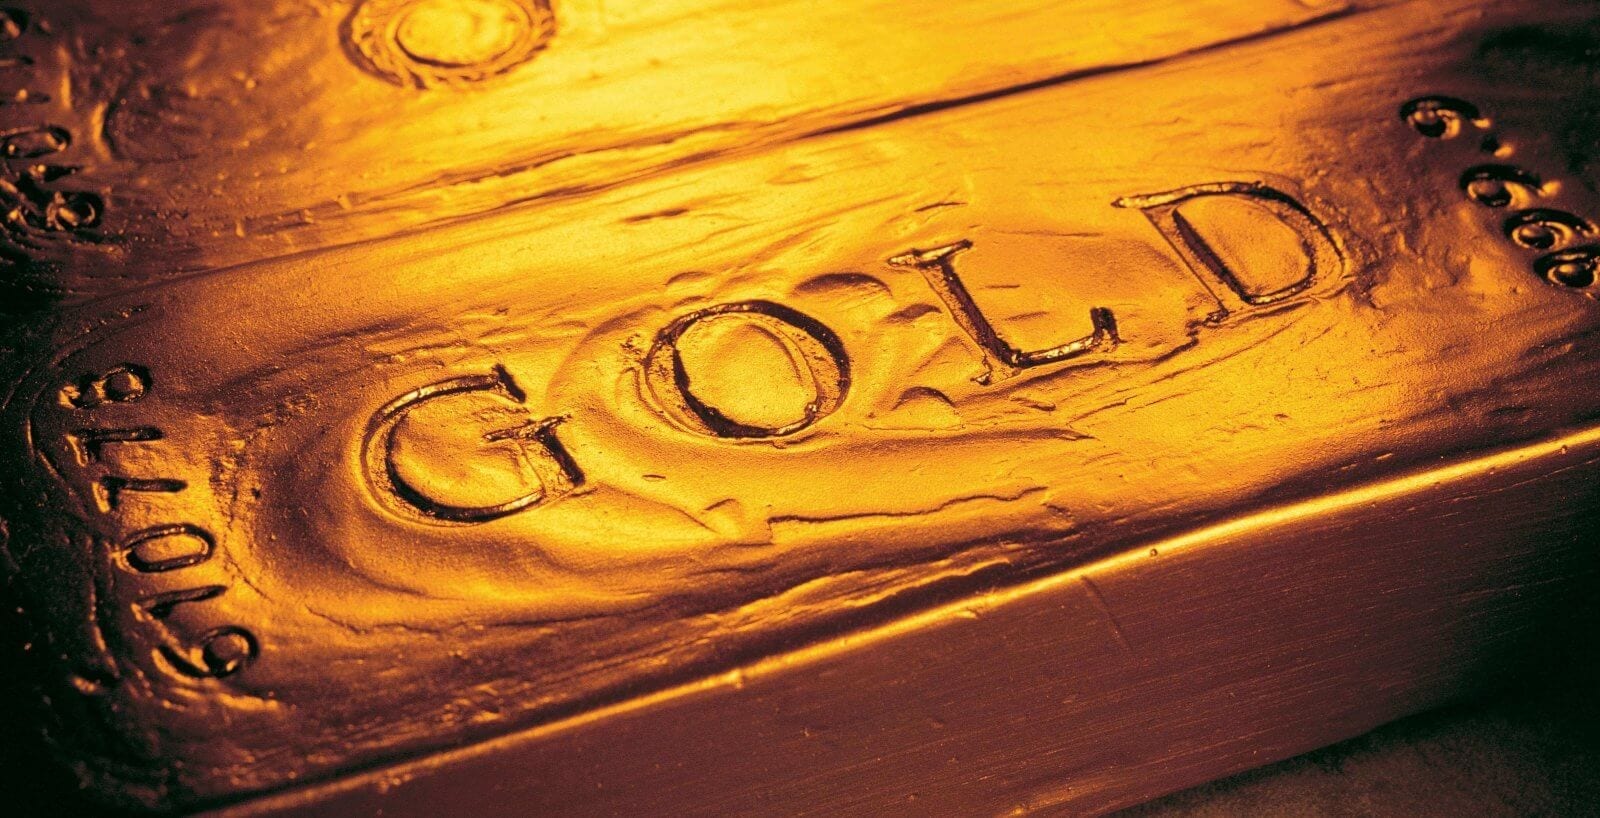 Gold Price Fall